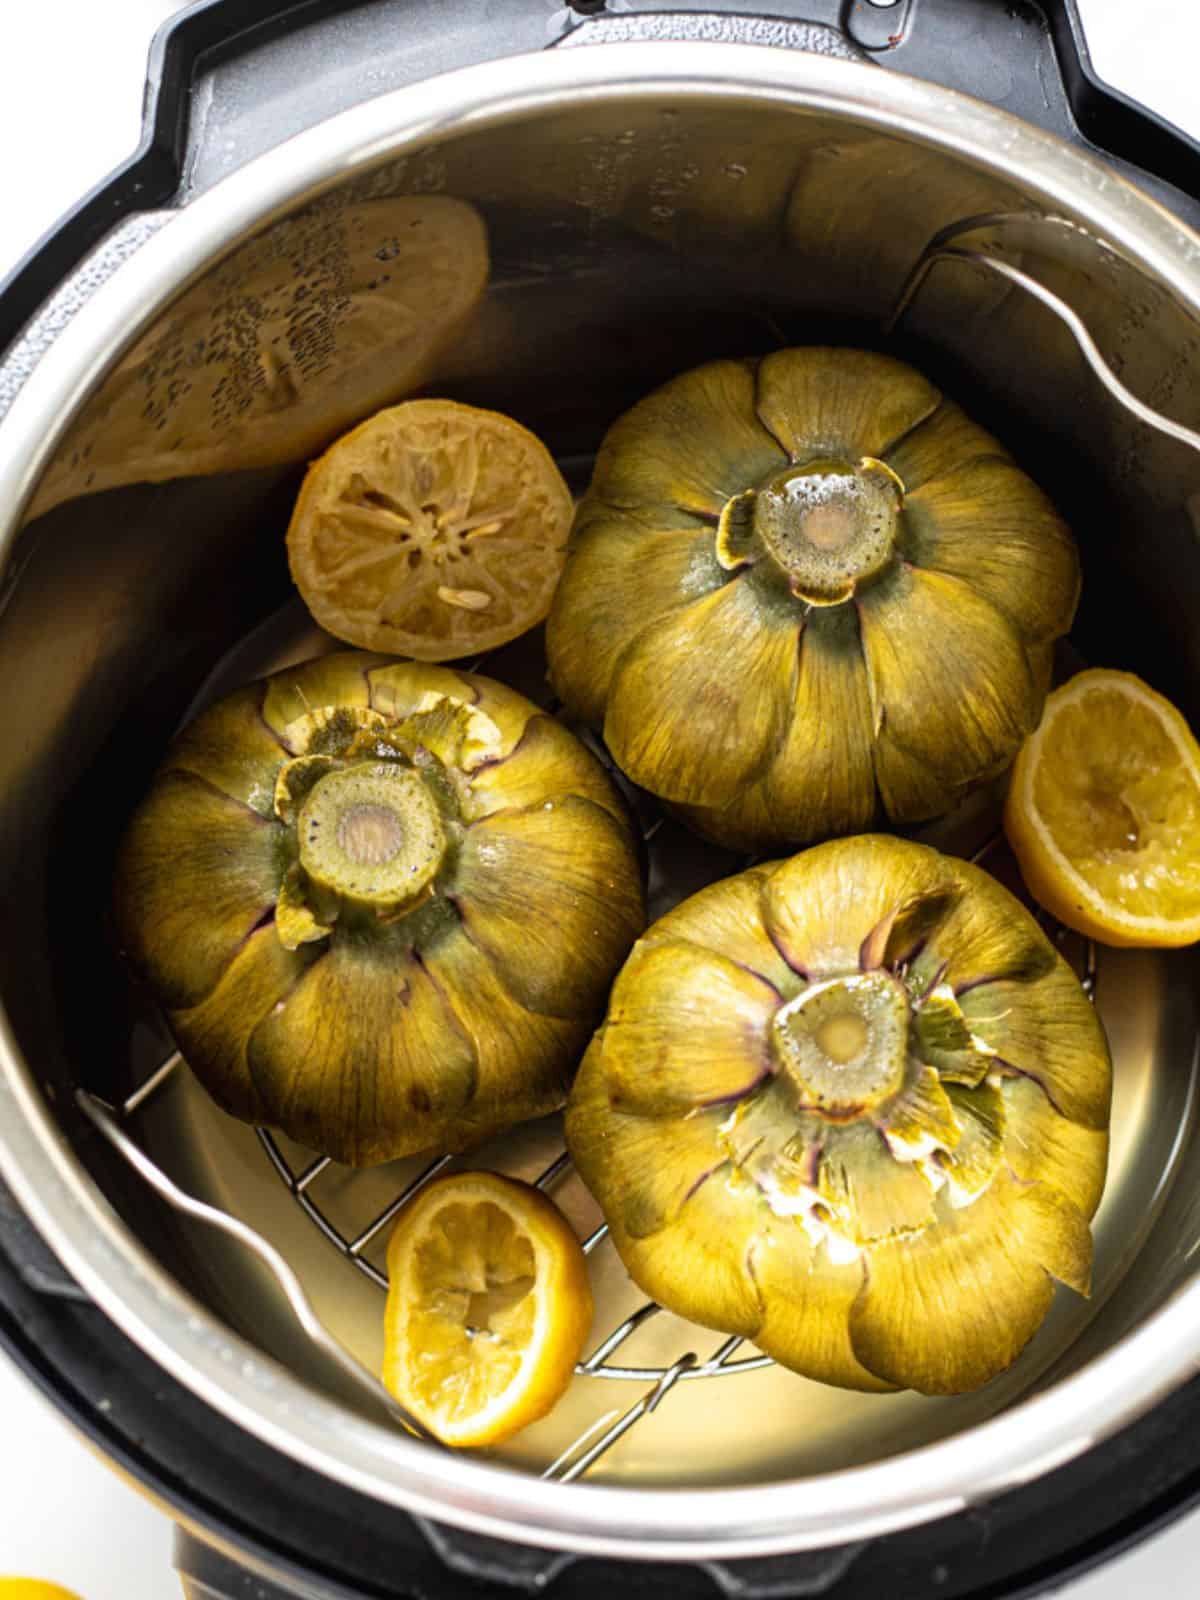 Three pressure cooked whole artichokes inside inner pot on metal trivet with sliced lemon.